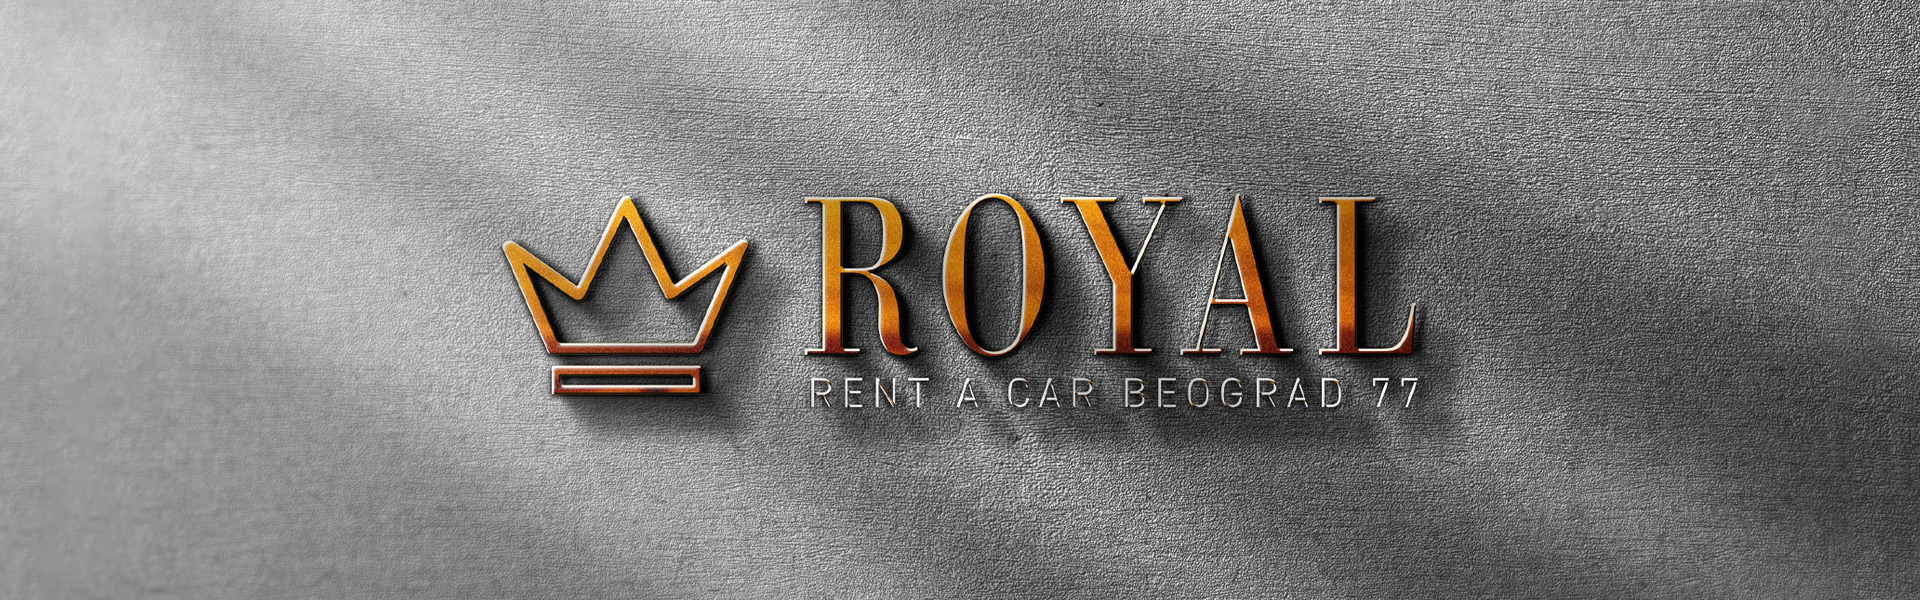 Zubni Implanti Beograd | Rent a car Beograd Royal